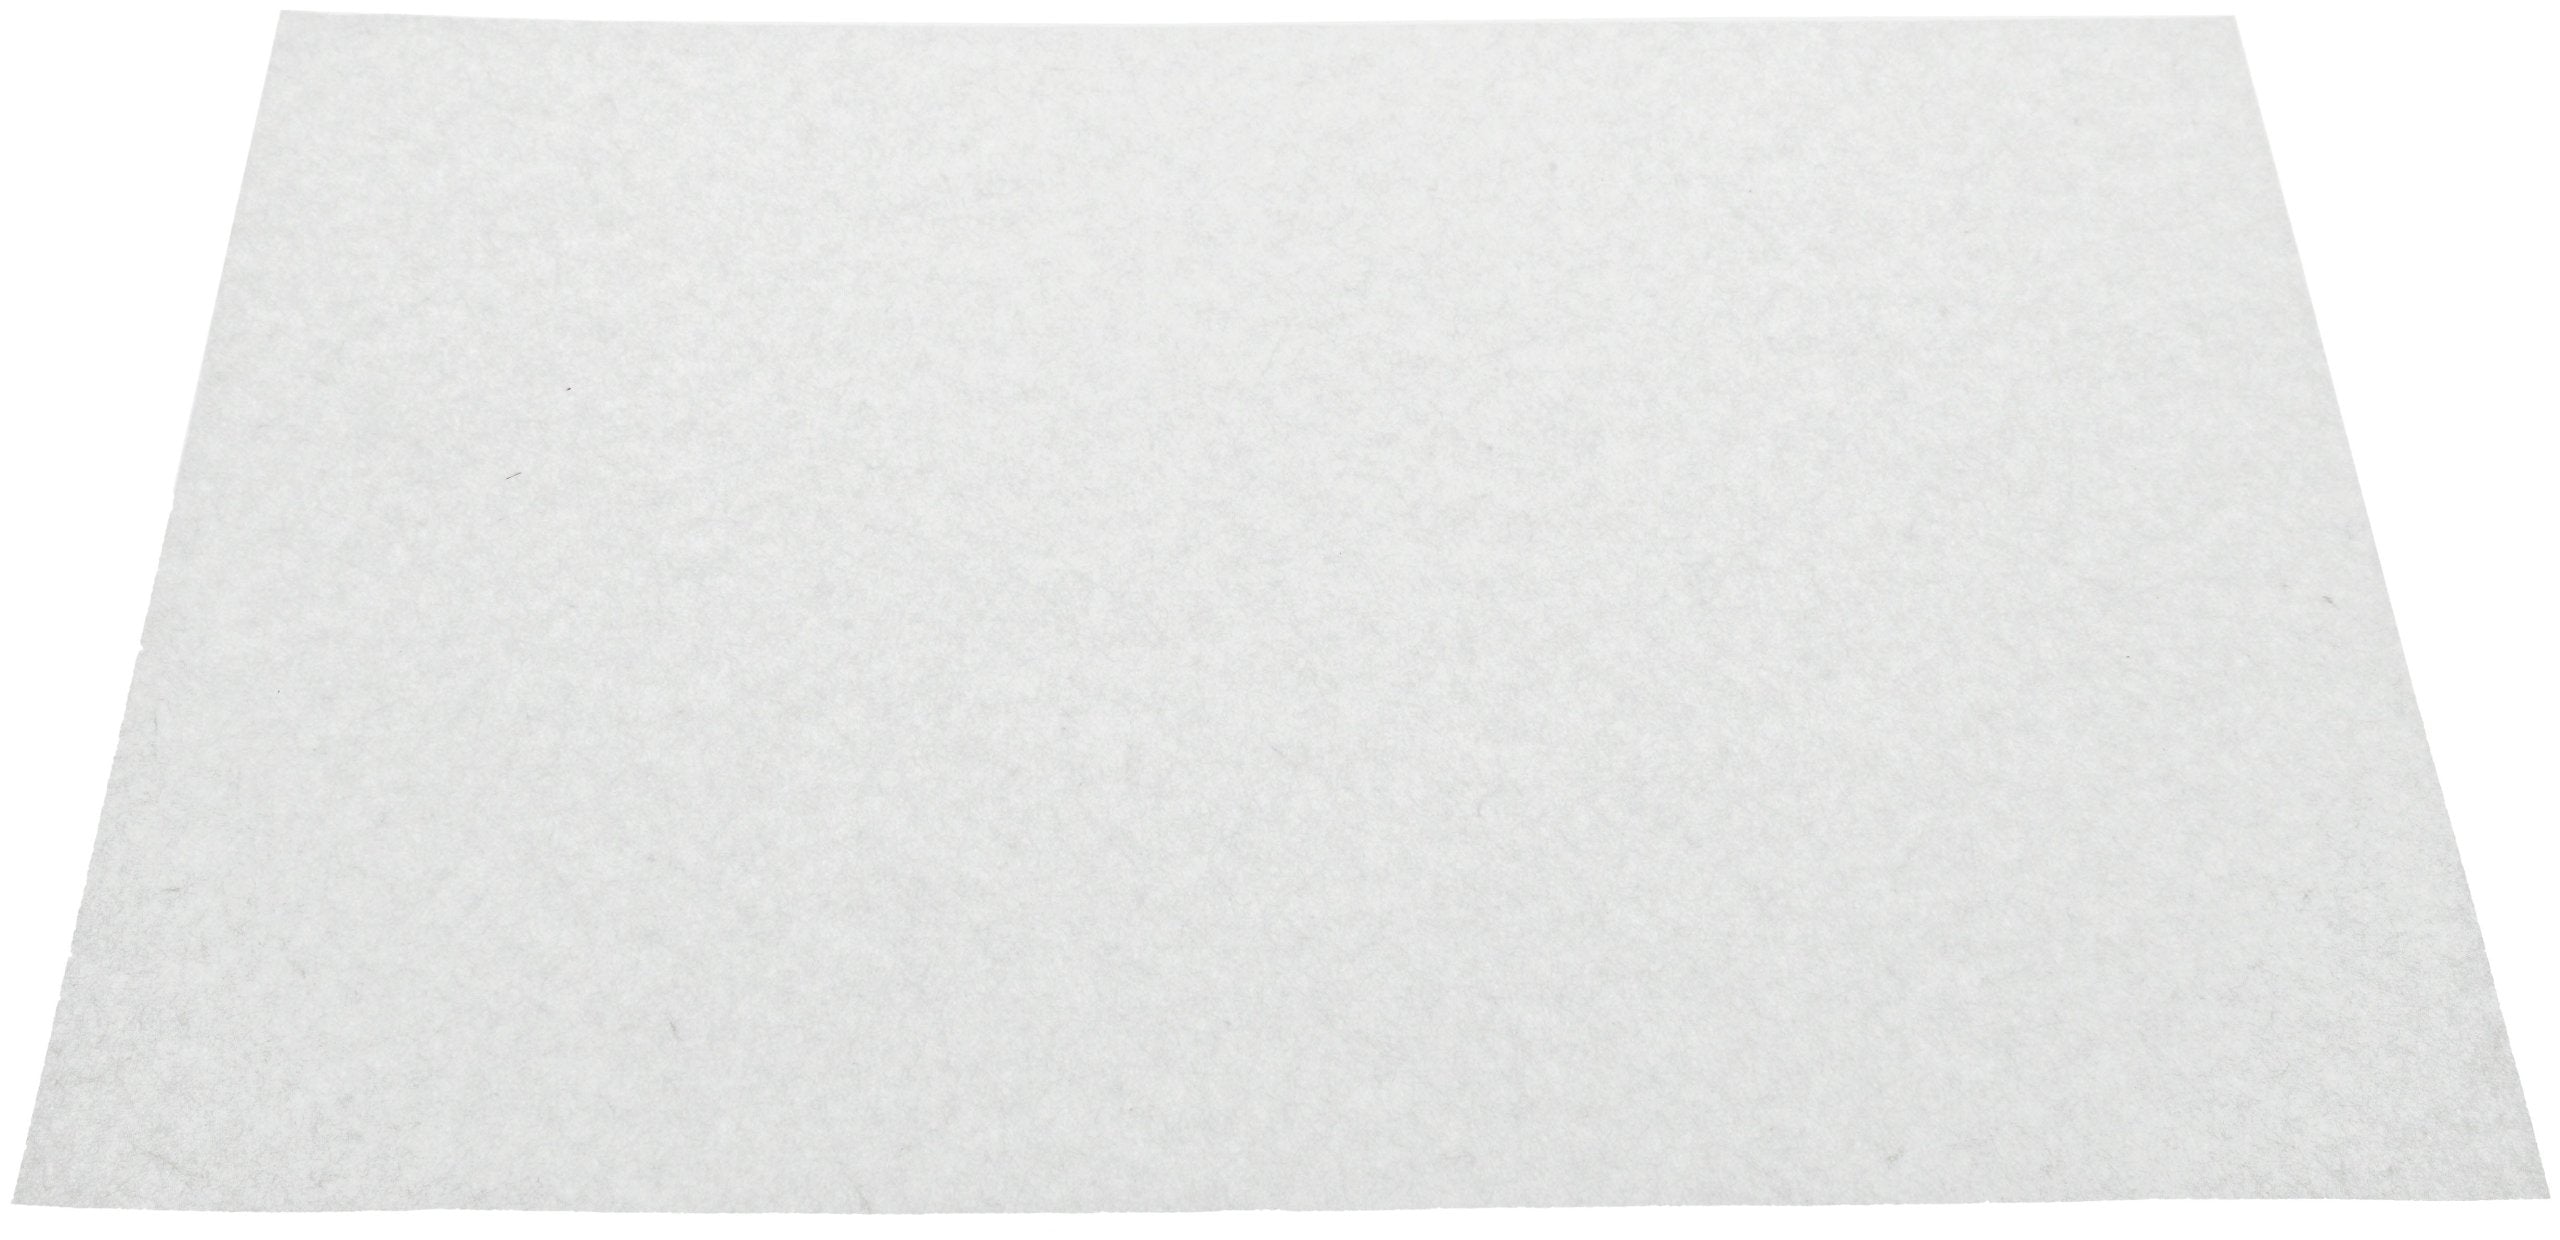 Whatman 10427810 Blotting Paper, Pure Cellulose, Grade GB003 Sheets, 15 x 15cm, 100/pk